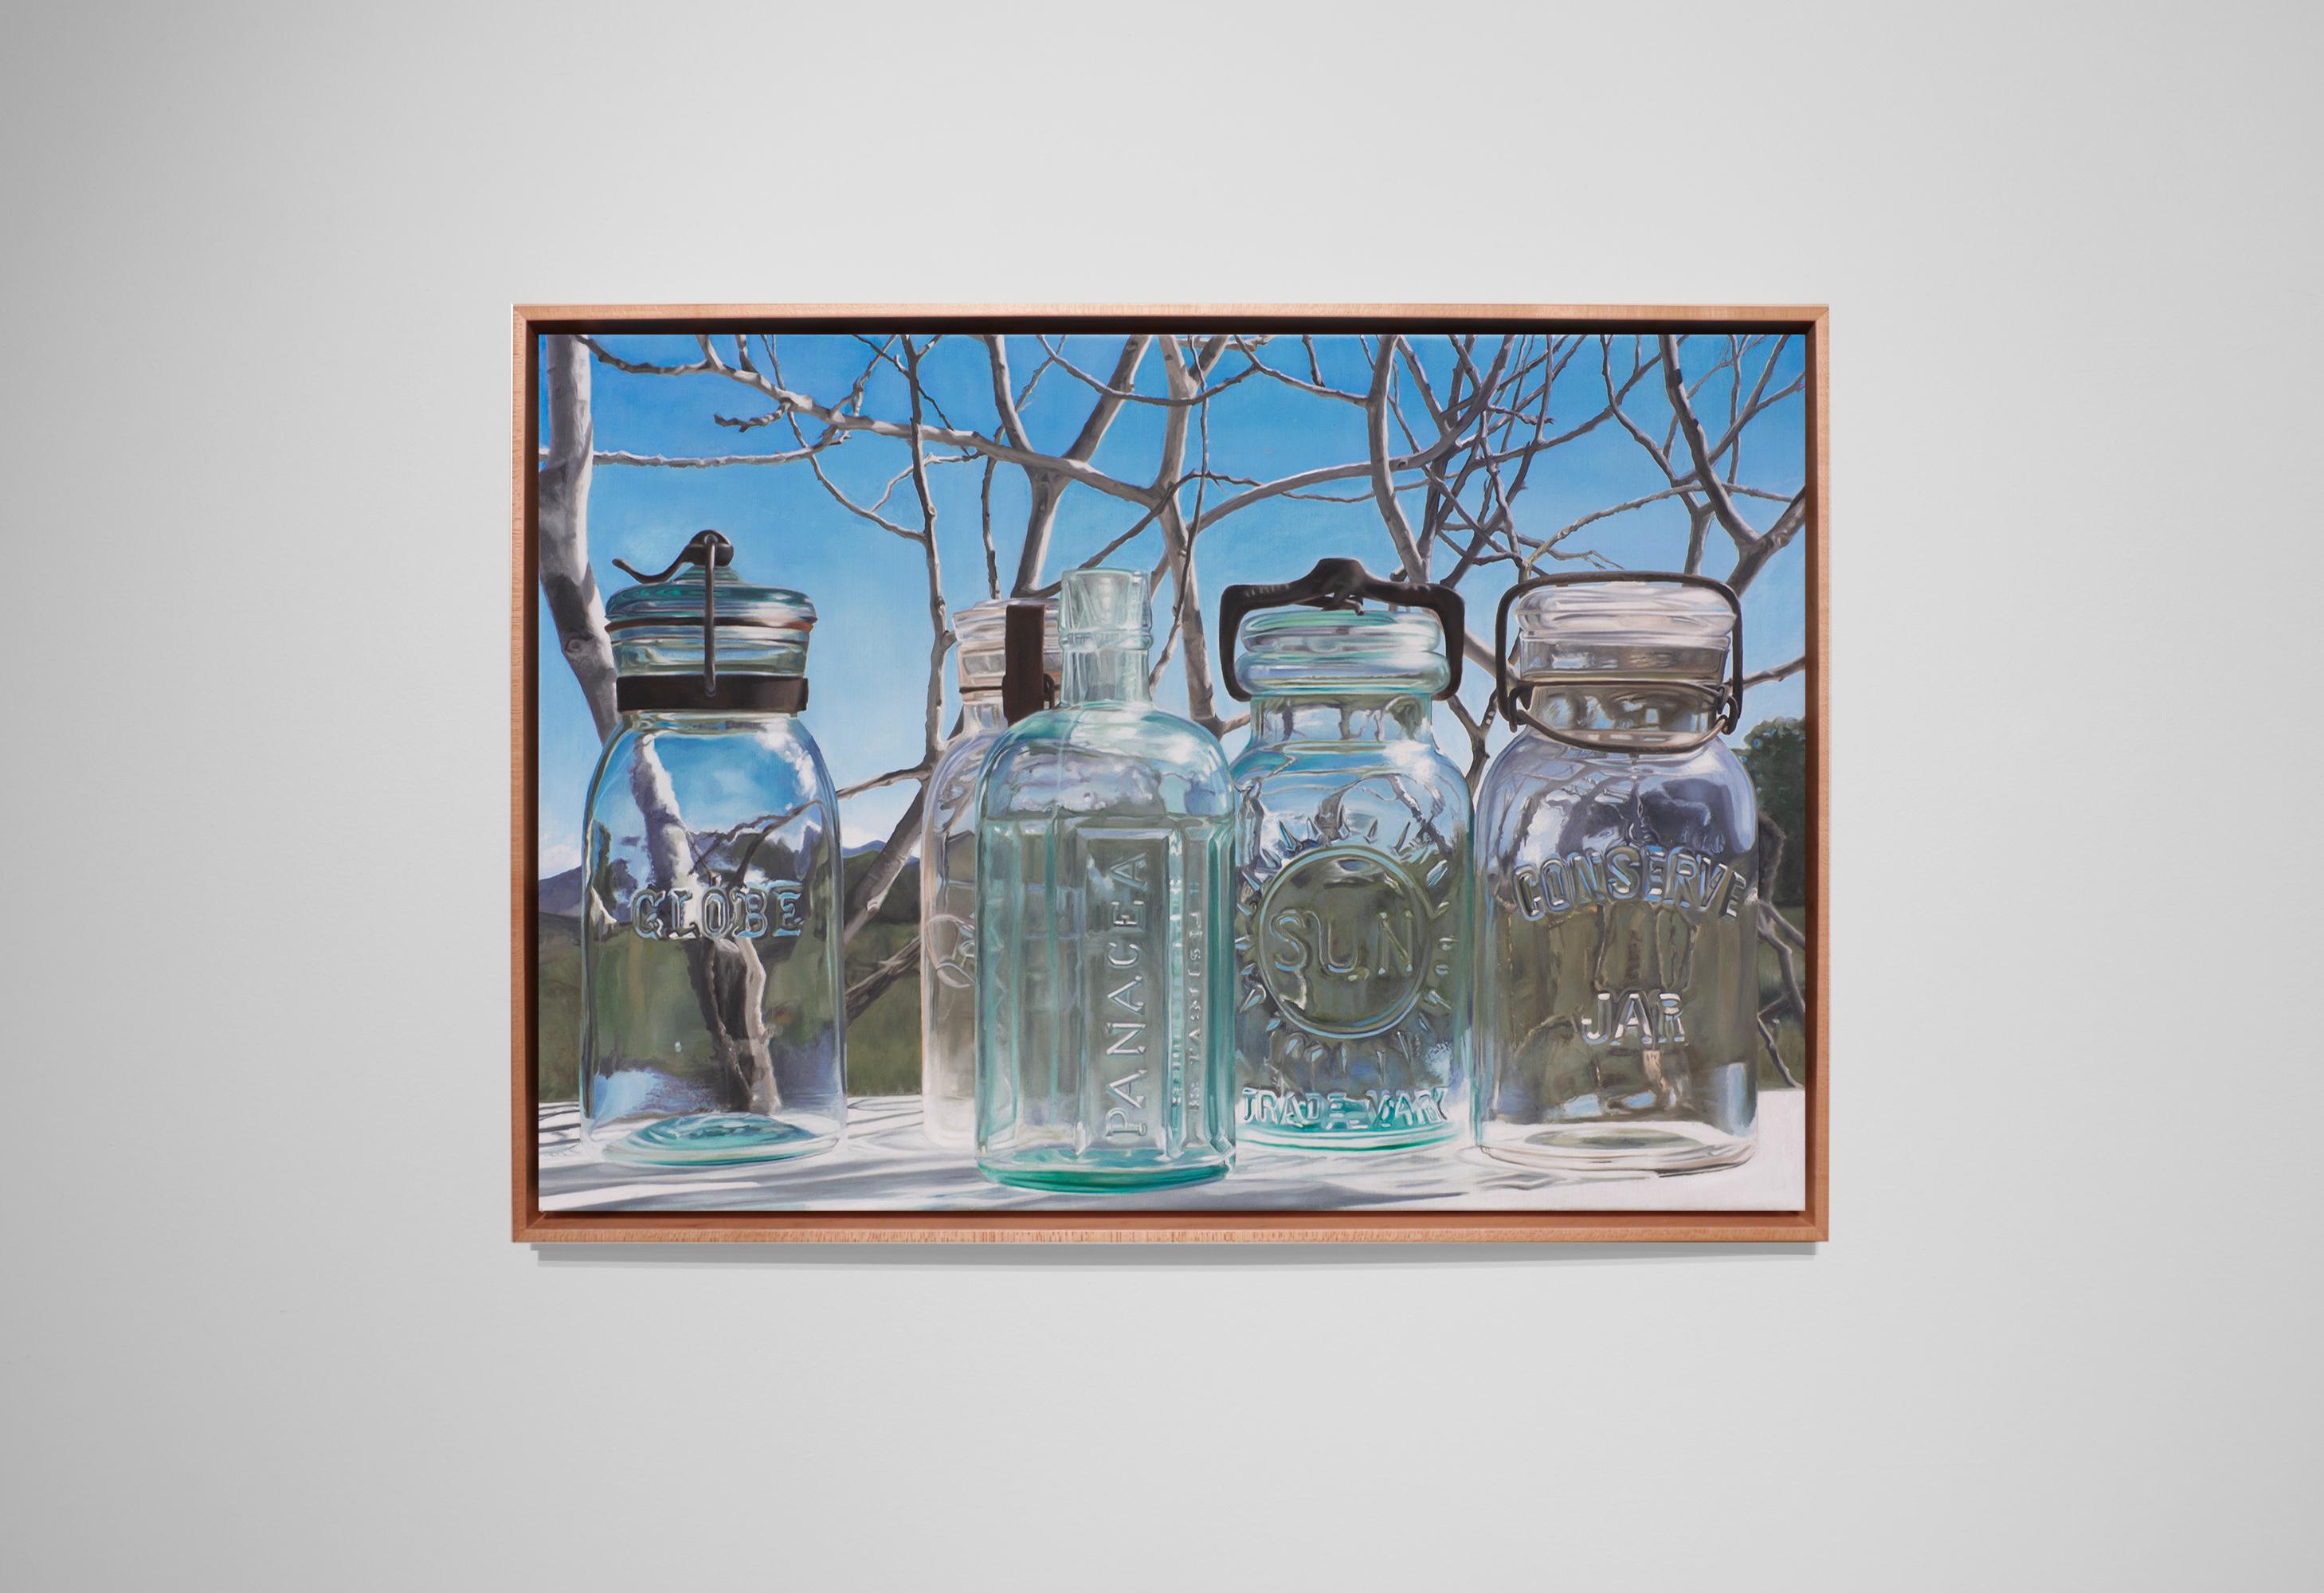 ENDLESS SKY, photo-realism, still-life, glass jars, blue sky, winter backdrop - Painting by Steve Smulka